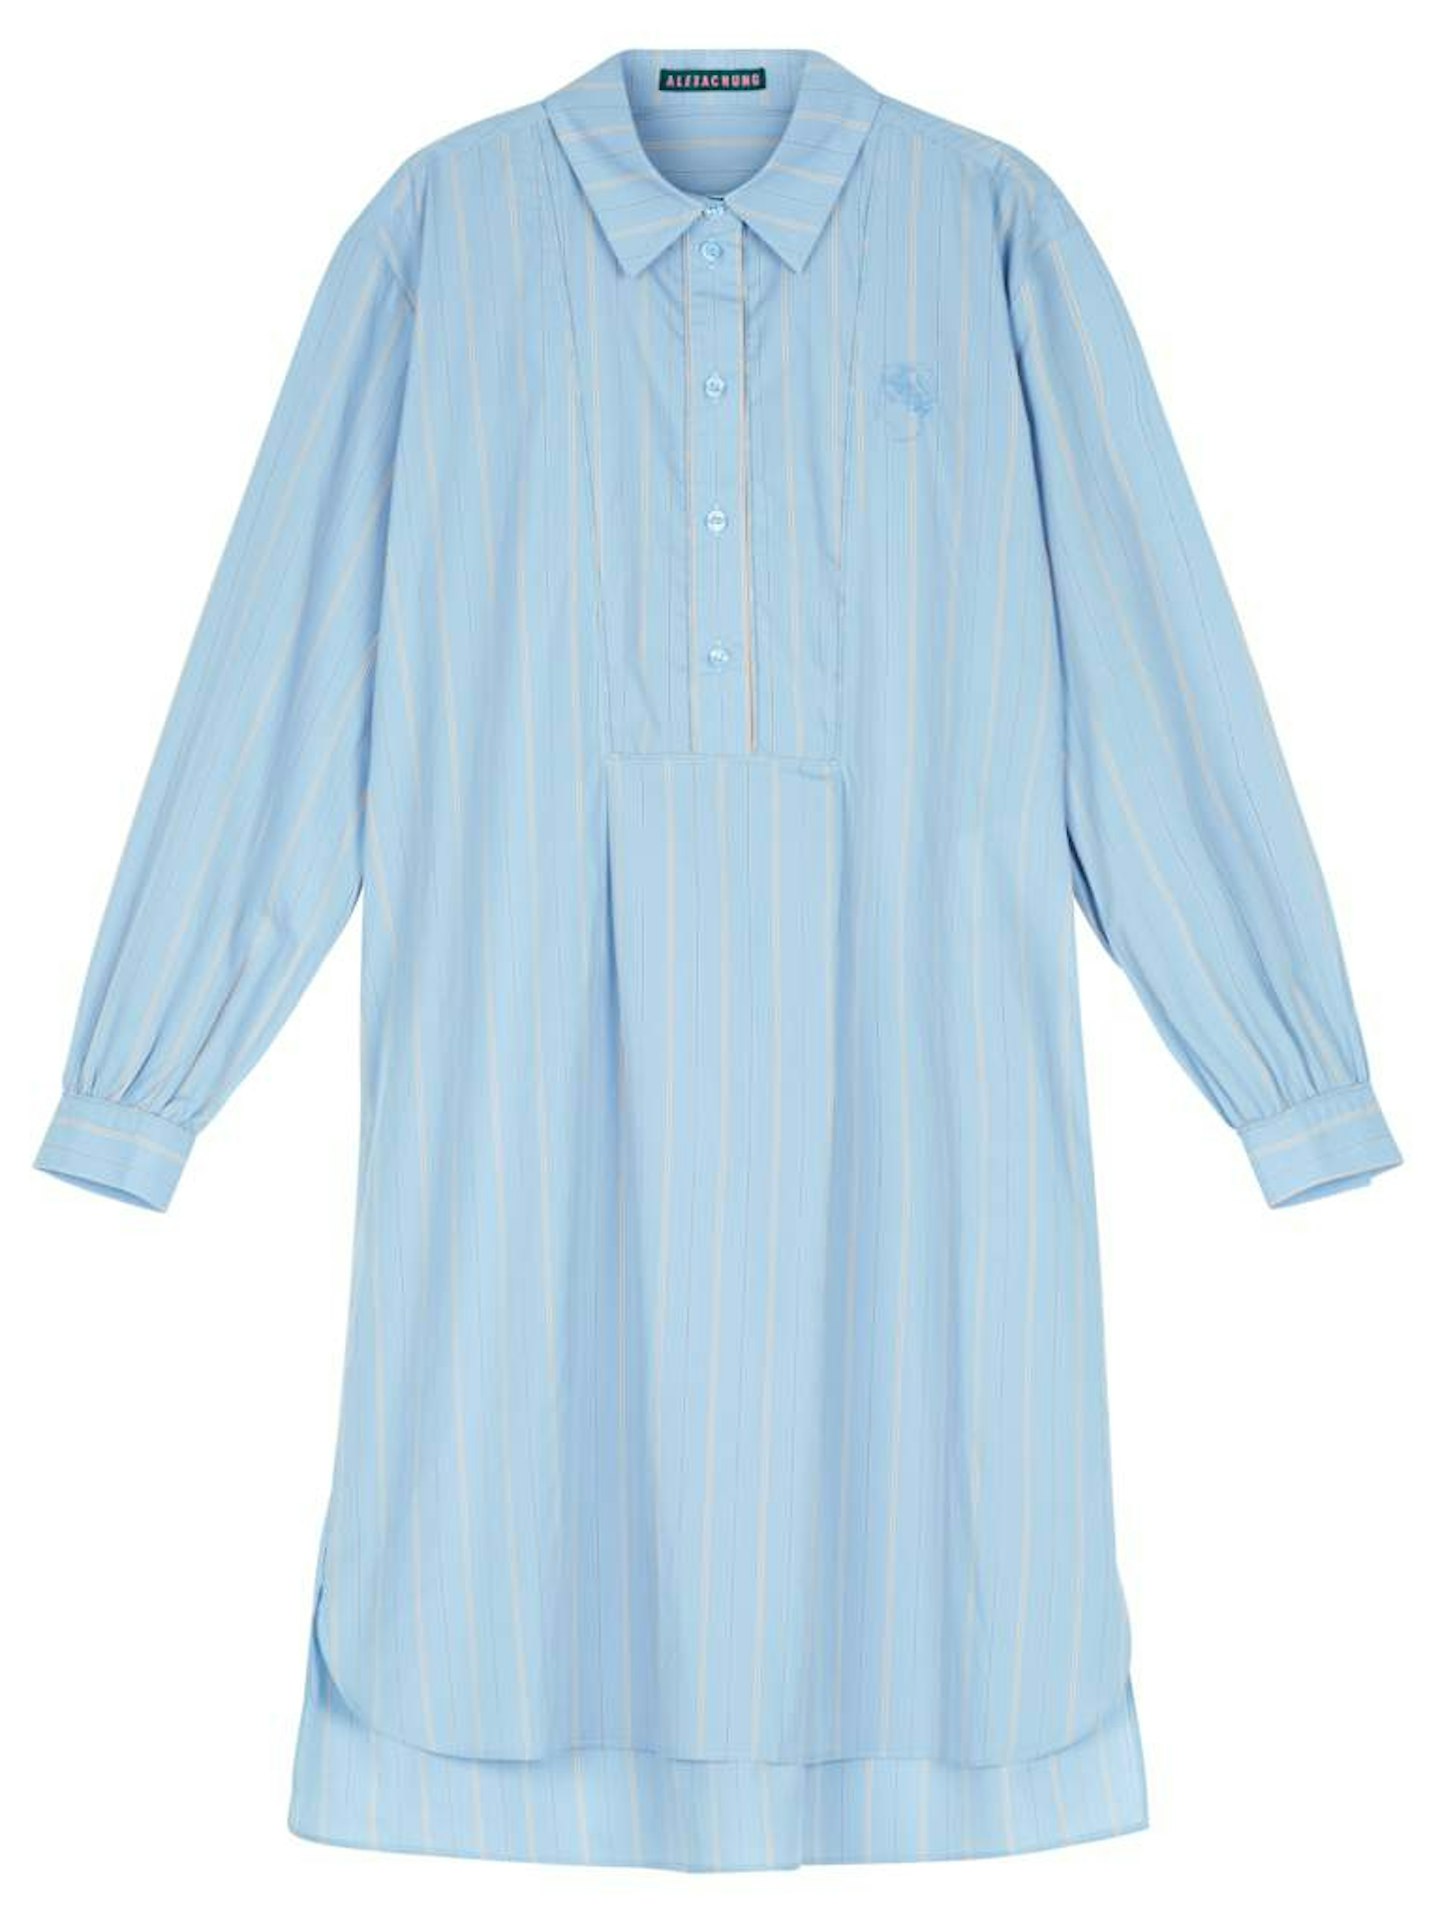 ALEXACHUNG, Ebeneezer nightshirt, £150